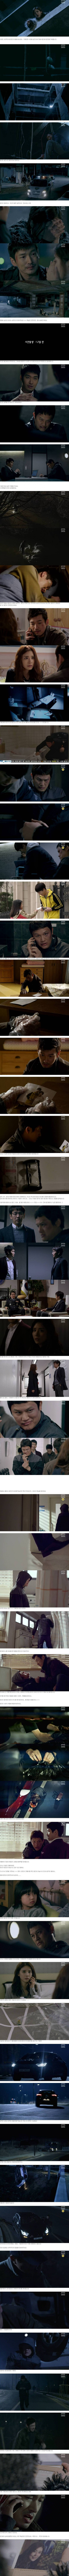 episode 5 captures for the Korean drama 'God's Gift - 14 Days'